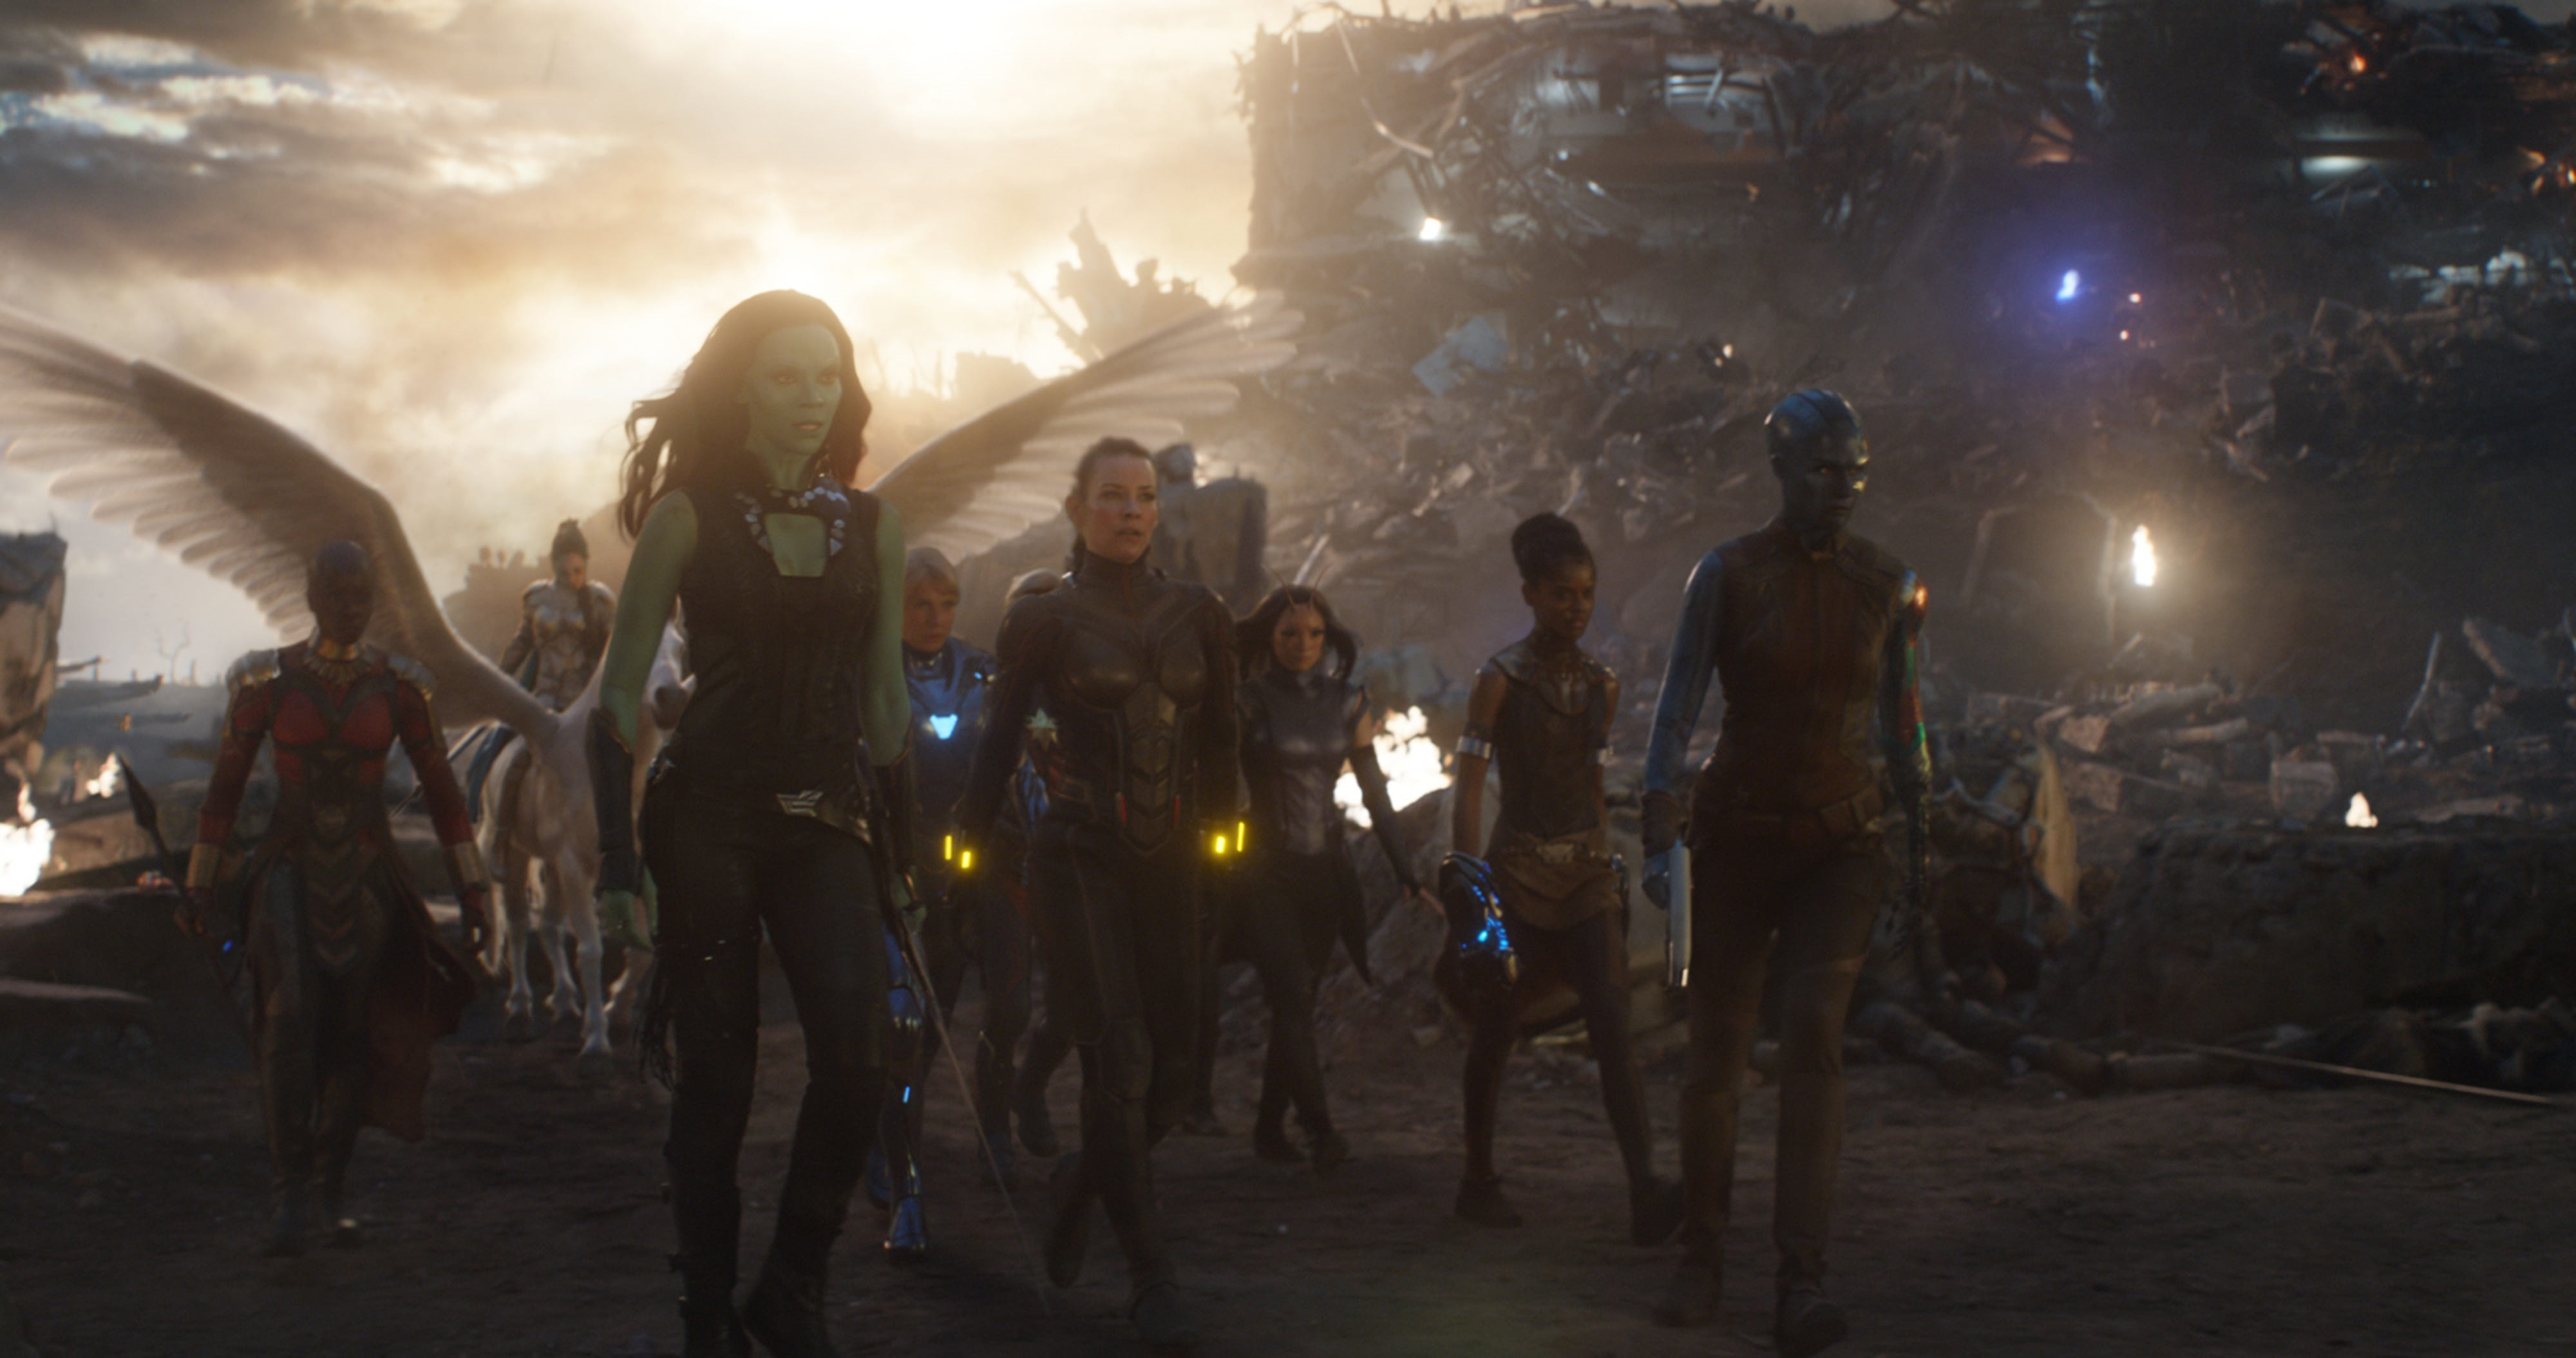 The Avengers assemble for one final battle in Endgame